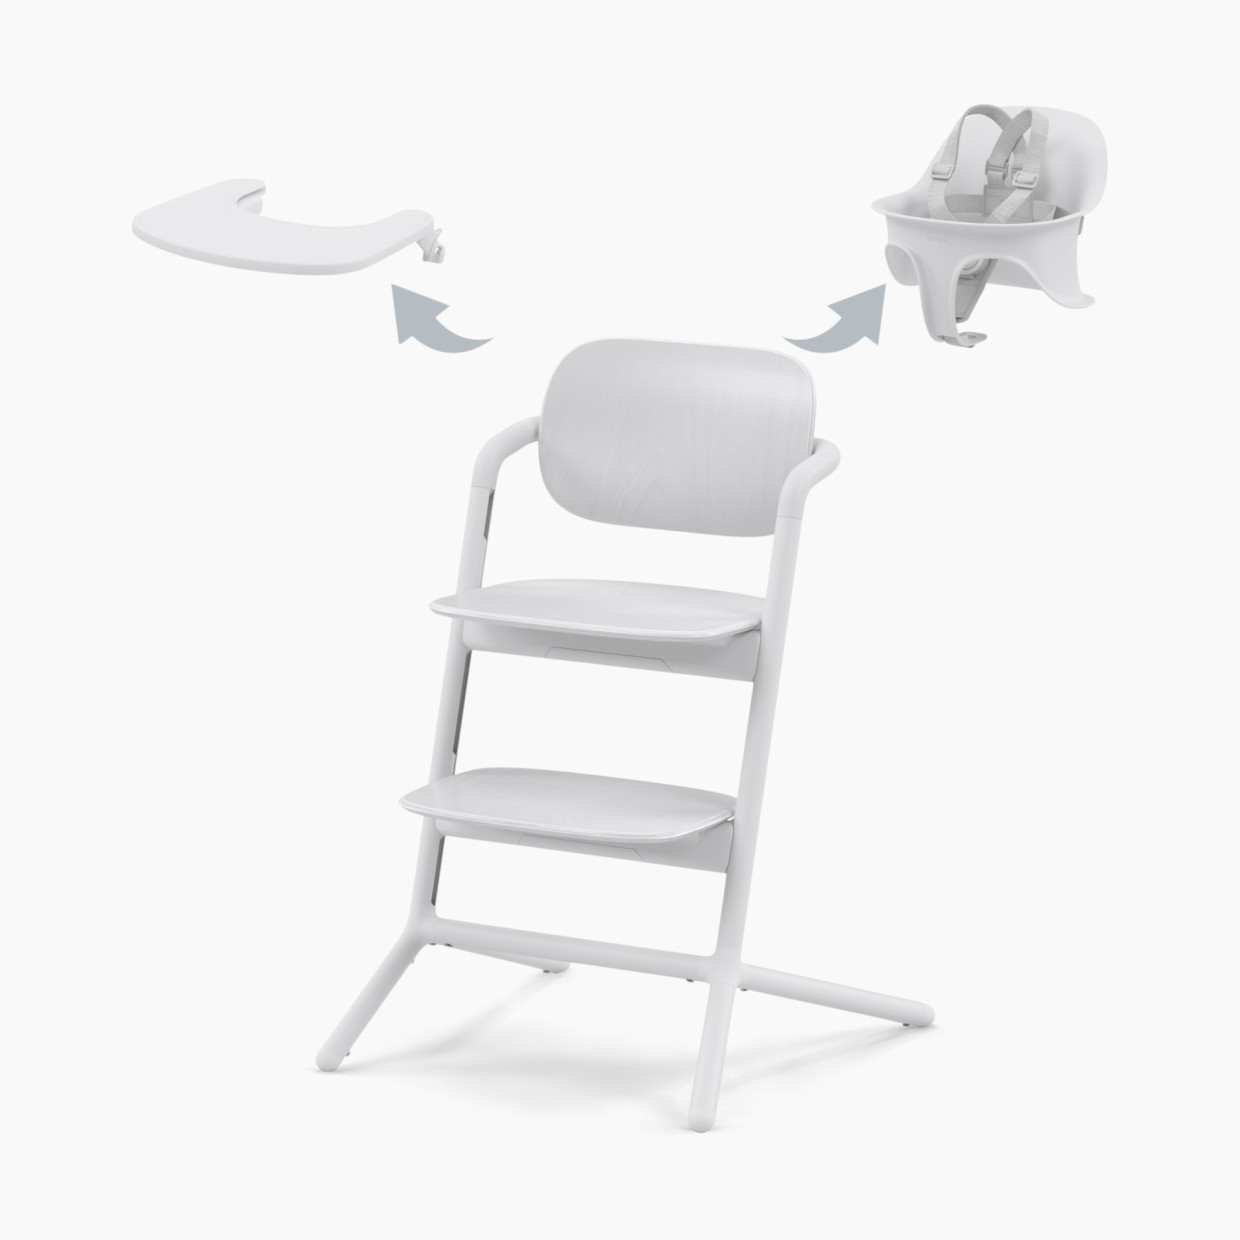 Cybex LEMO 2 High Chair 3-in-1 Set - All White.